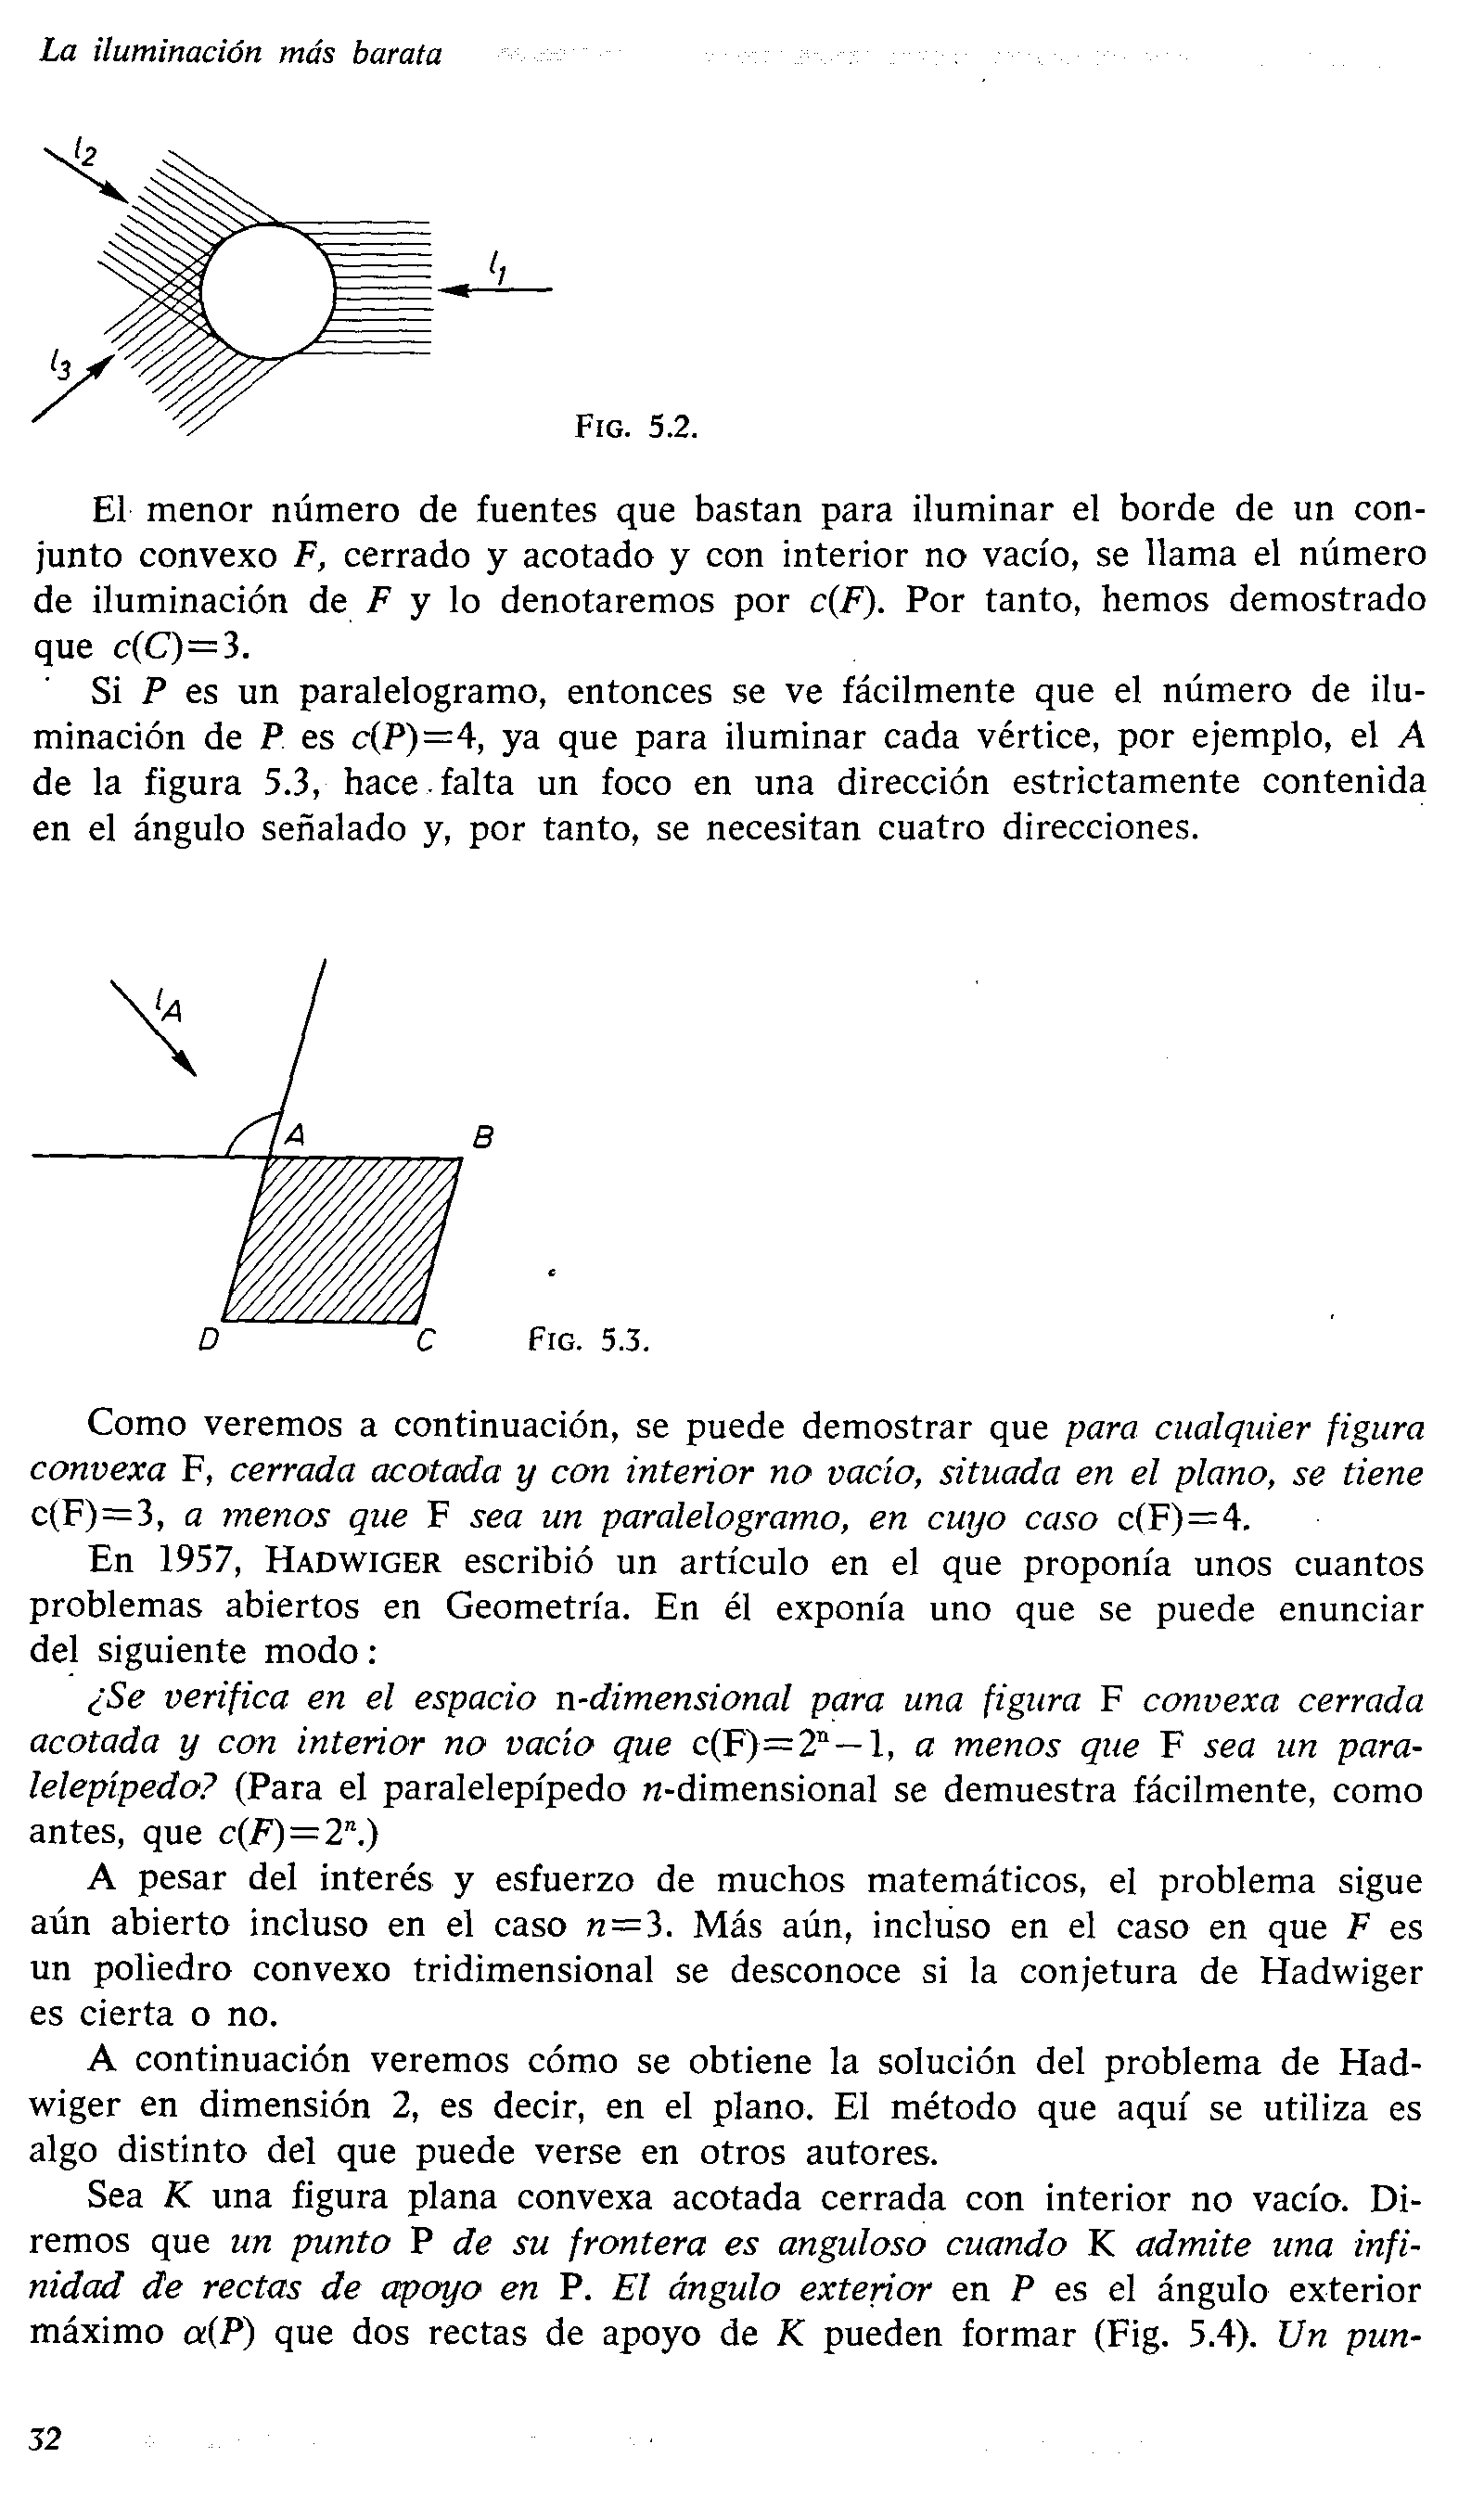 Graphics (p.6-1)